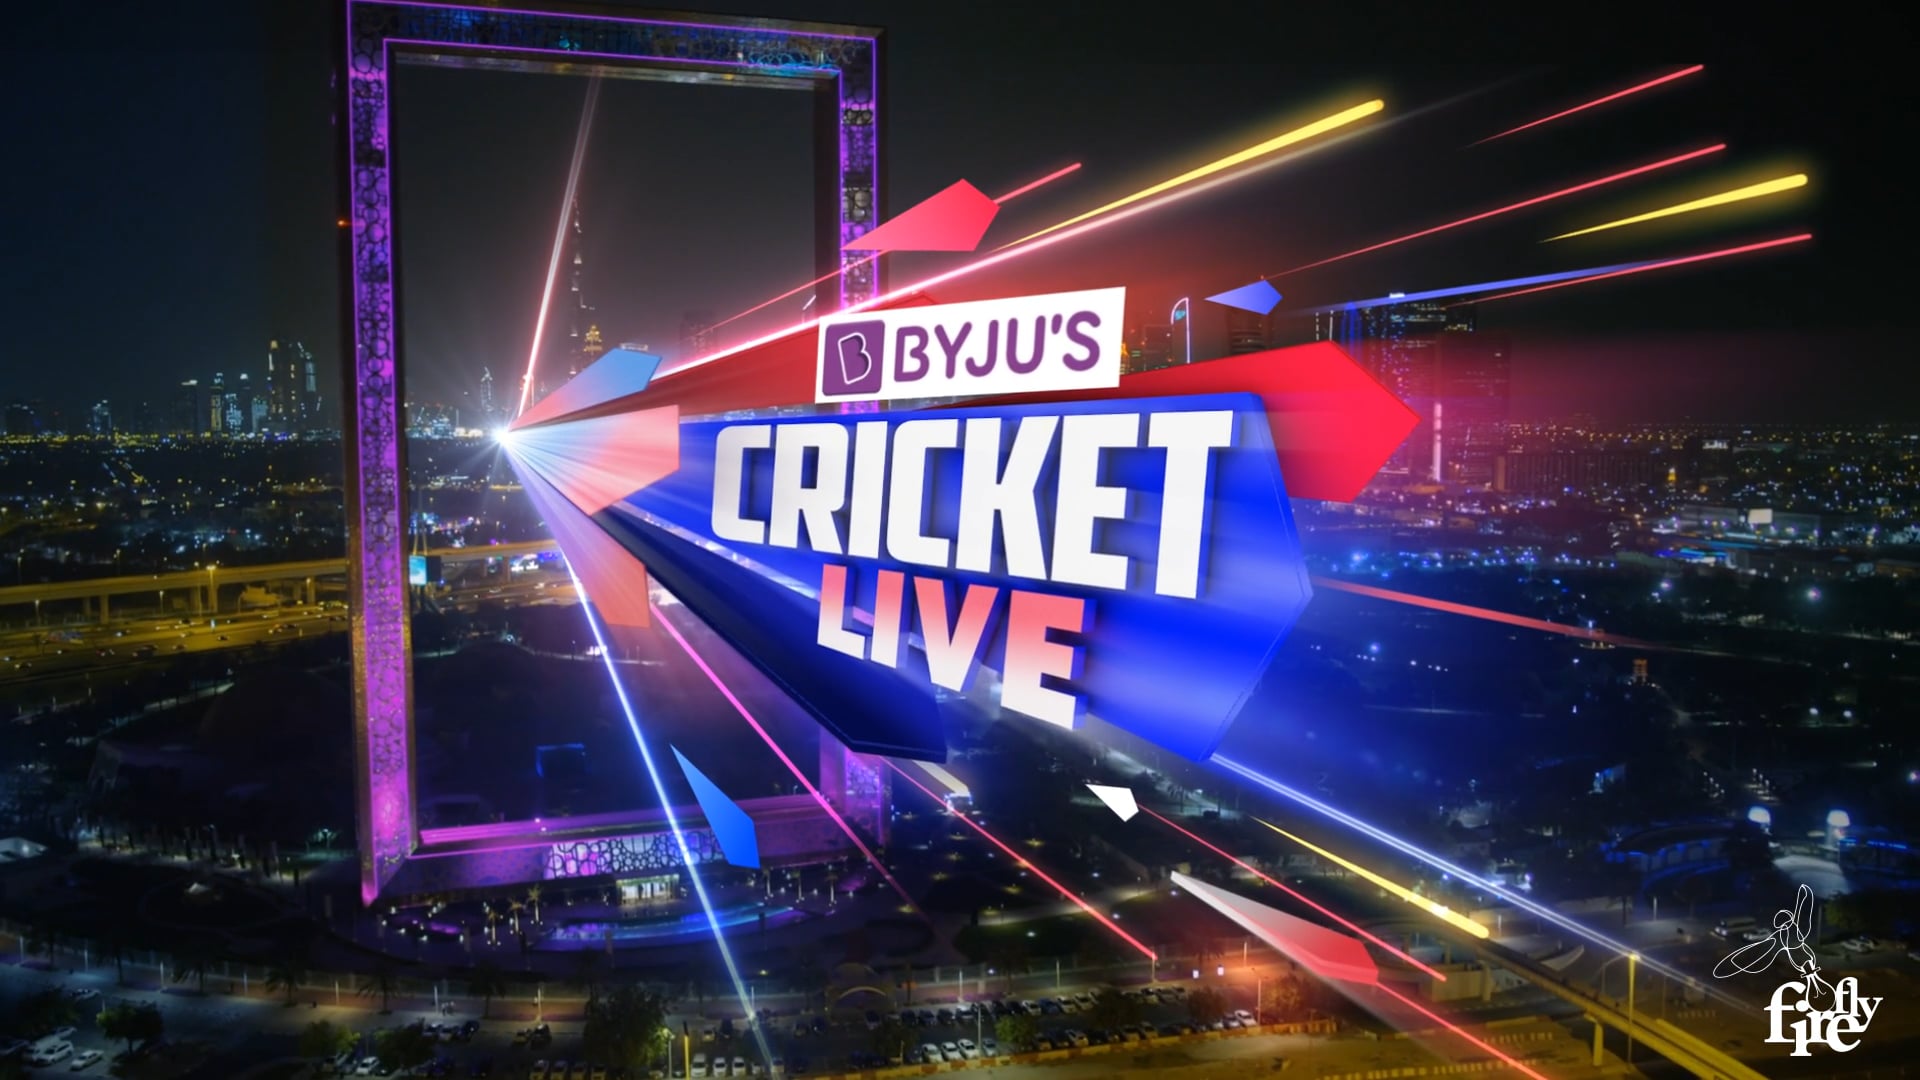 Cricket Live opener on Vimeo